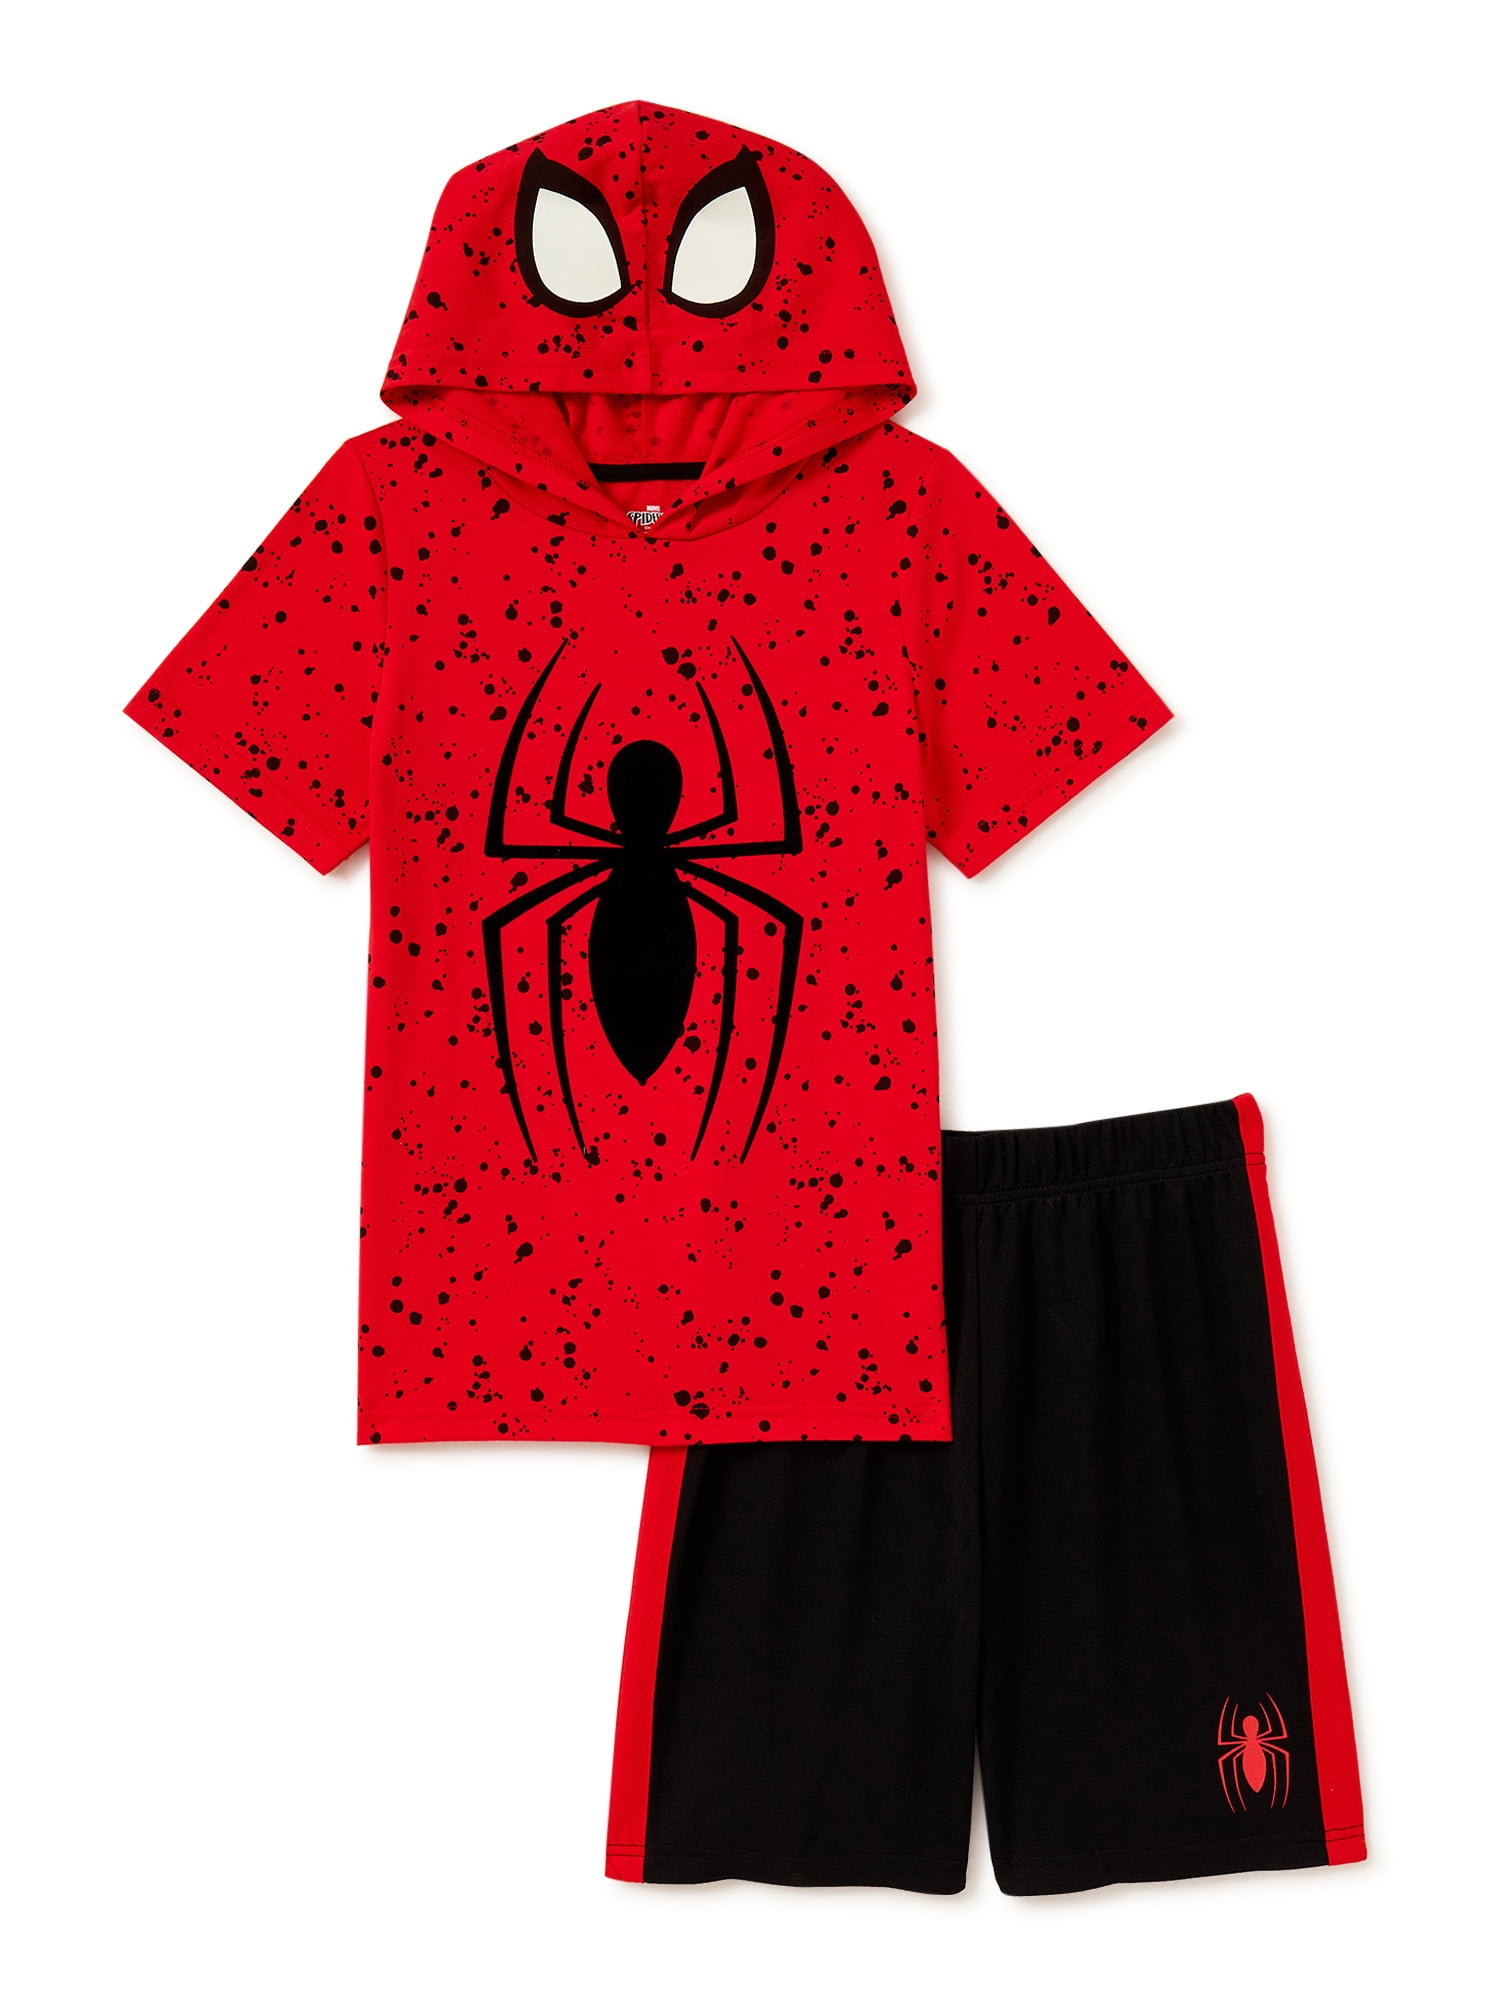 Spider-Man Boys' 2-Piece Climber Shorts Set Outfit 